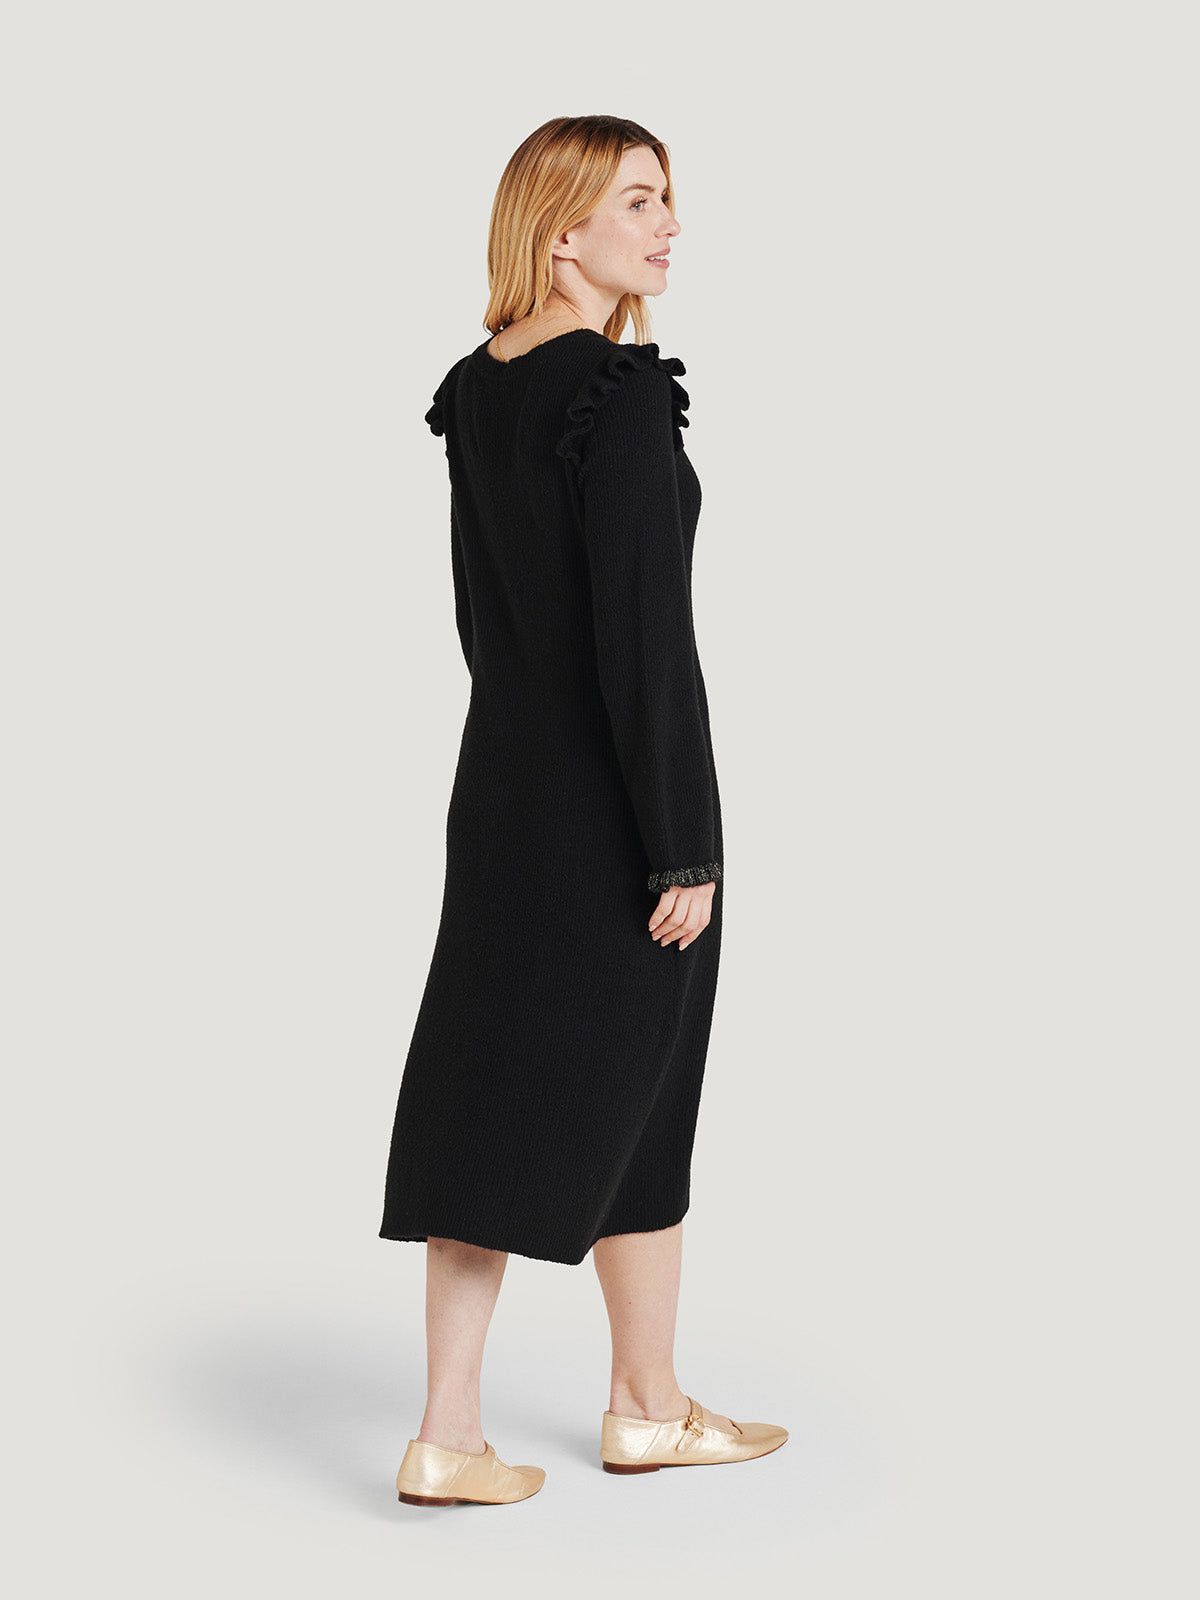 Aguilar Organic Cotton Fluffy Knit Dress - Black